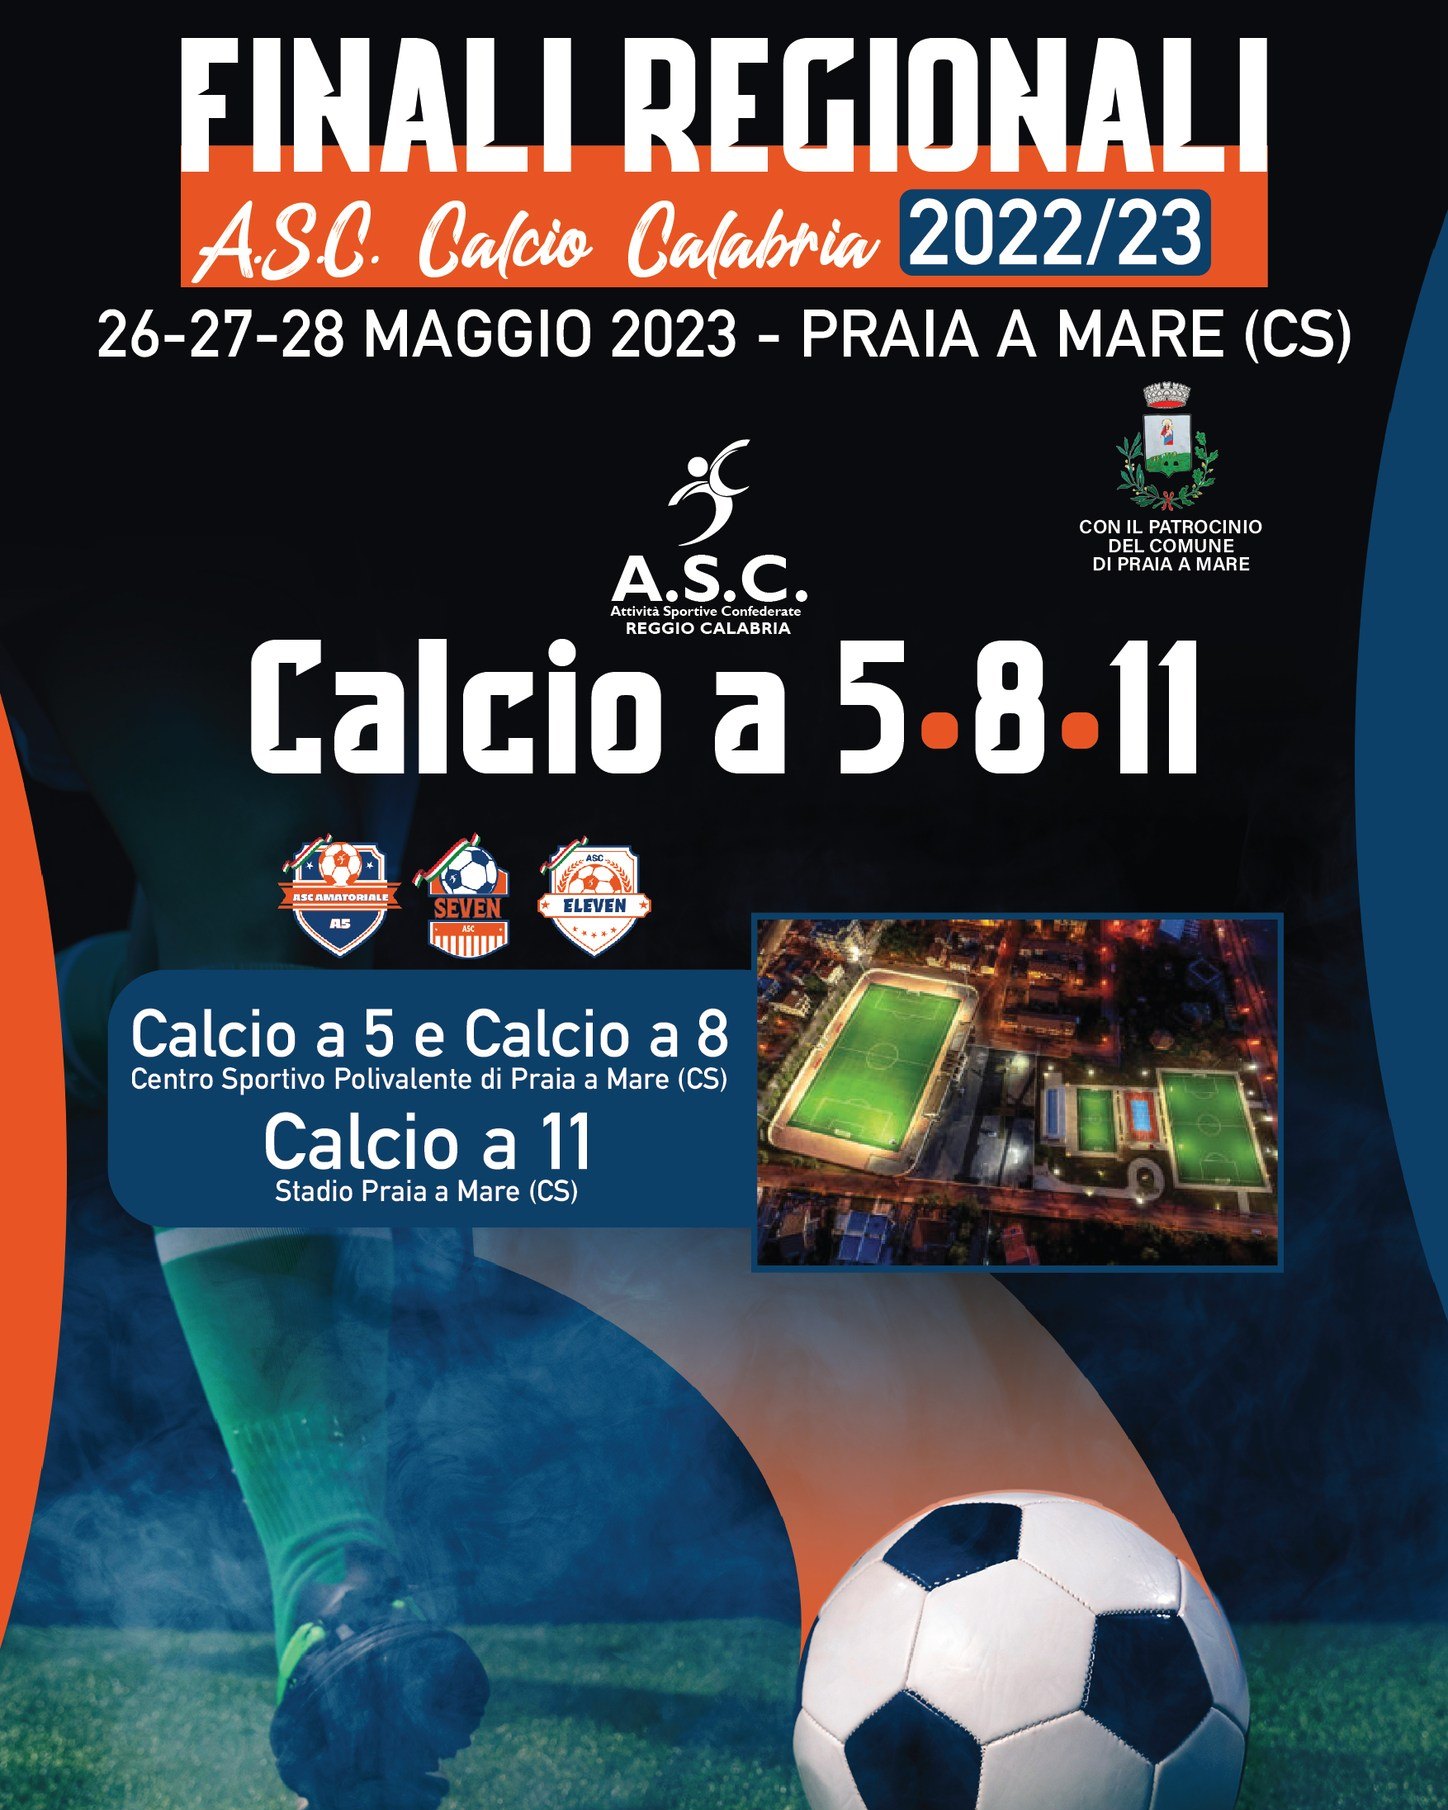 Finali Regionali di ASC calcio calabria 2022 23